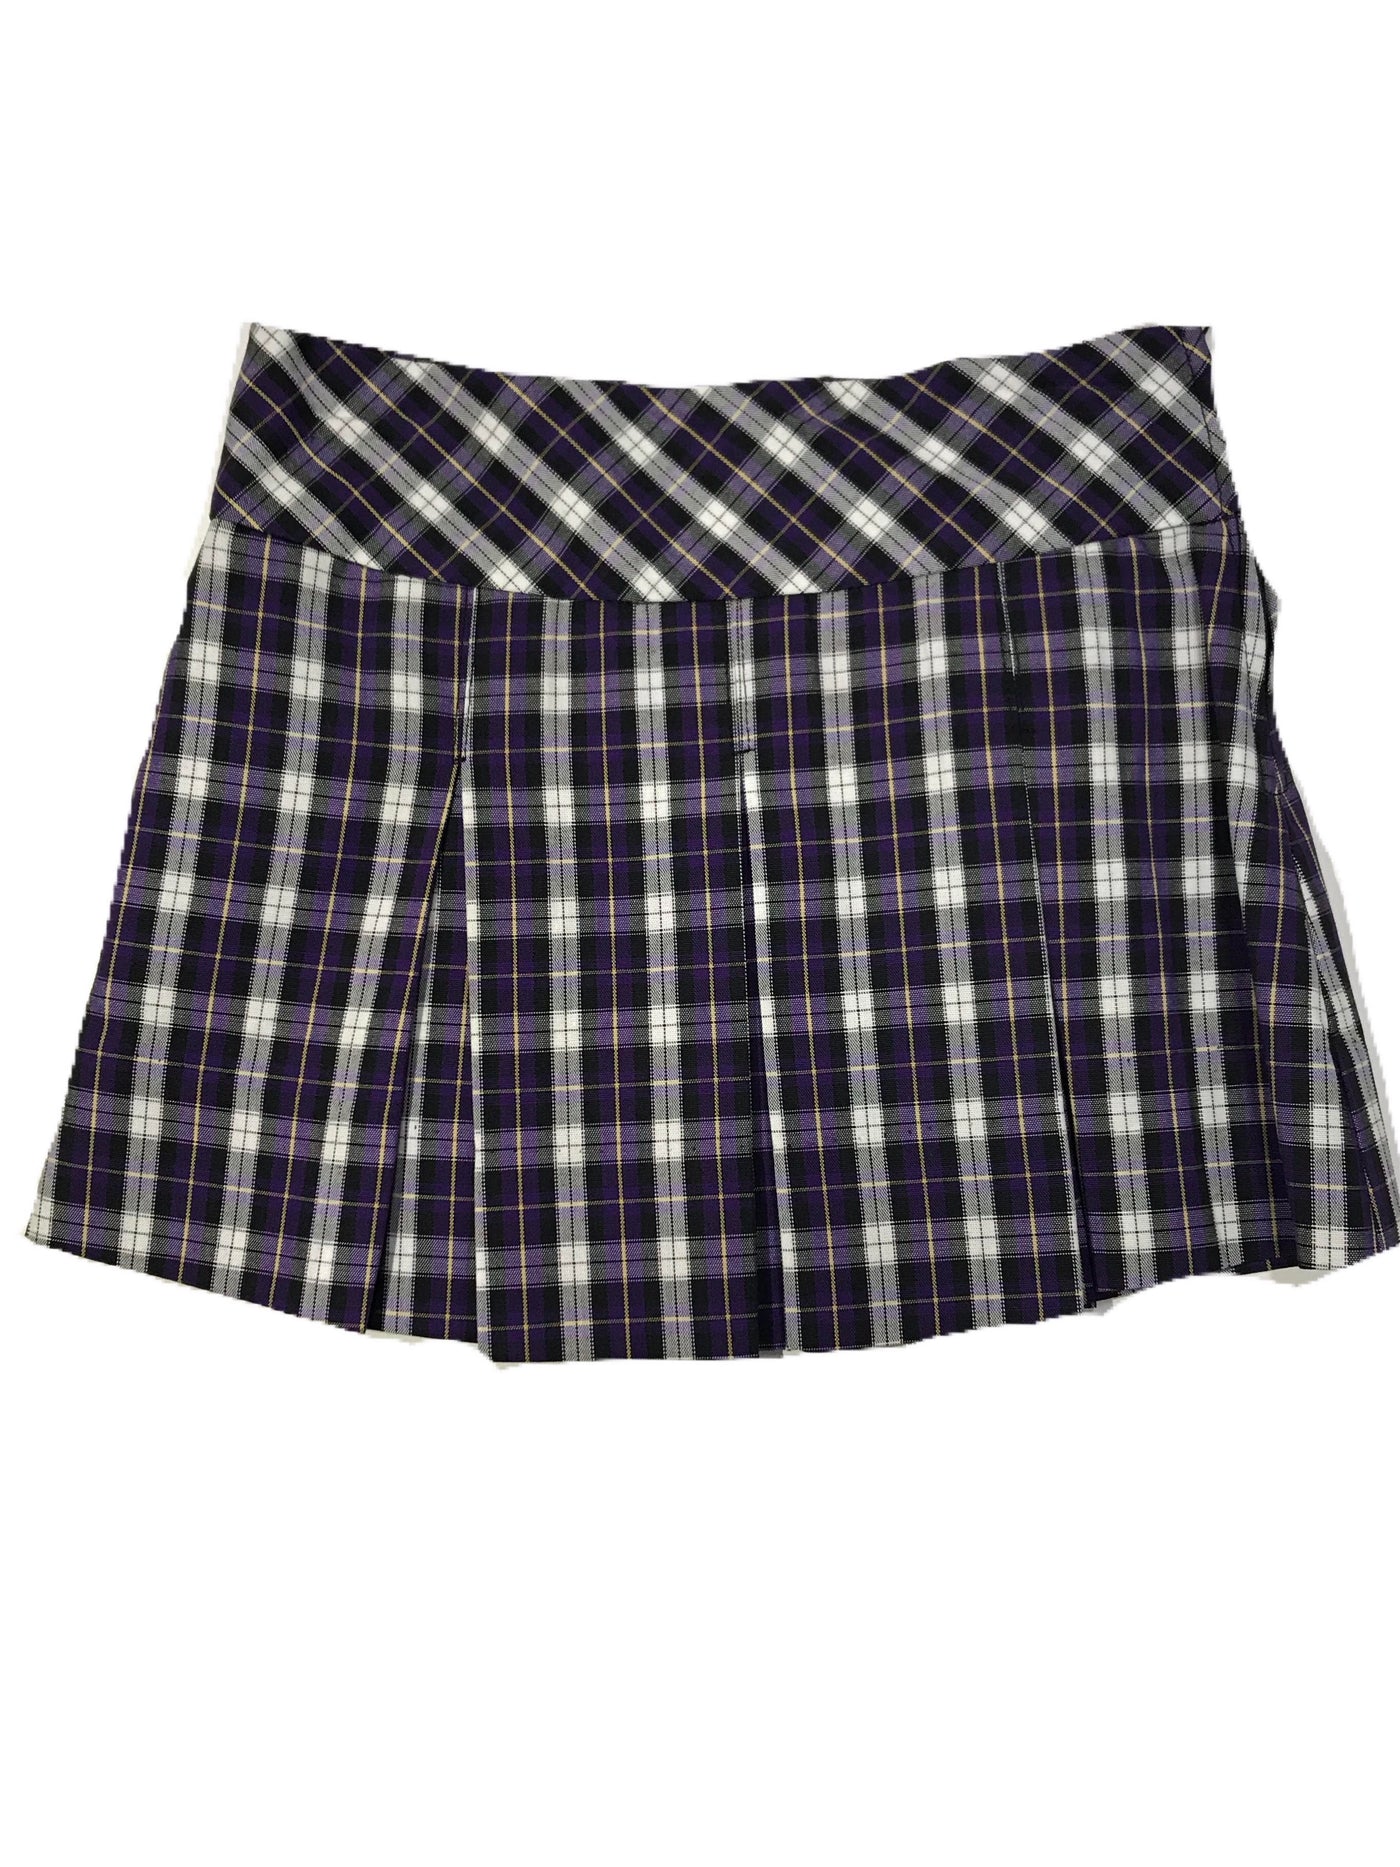 CPA plaid skirt